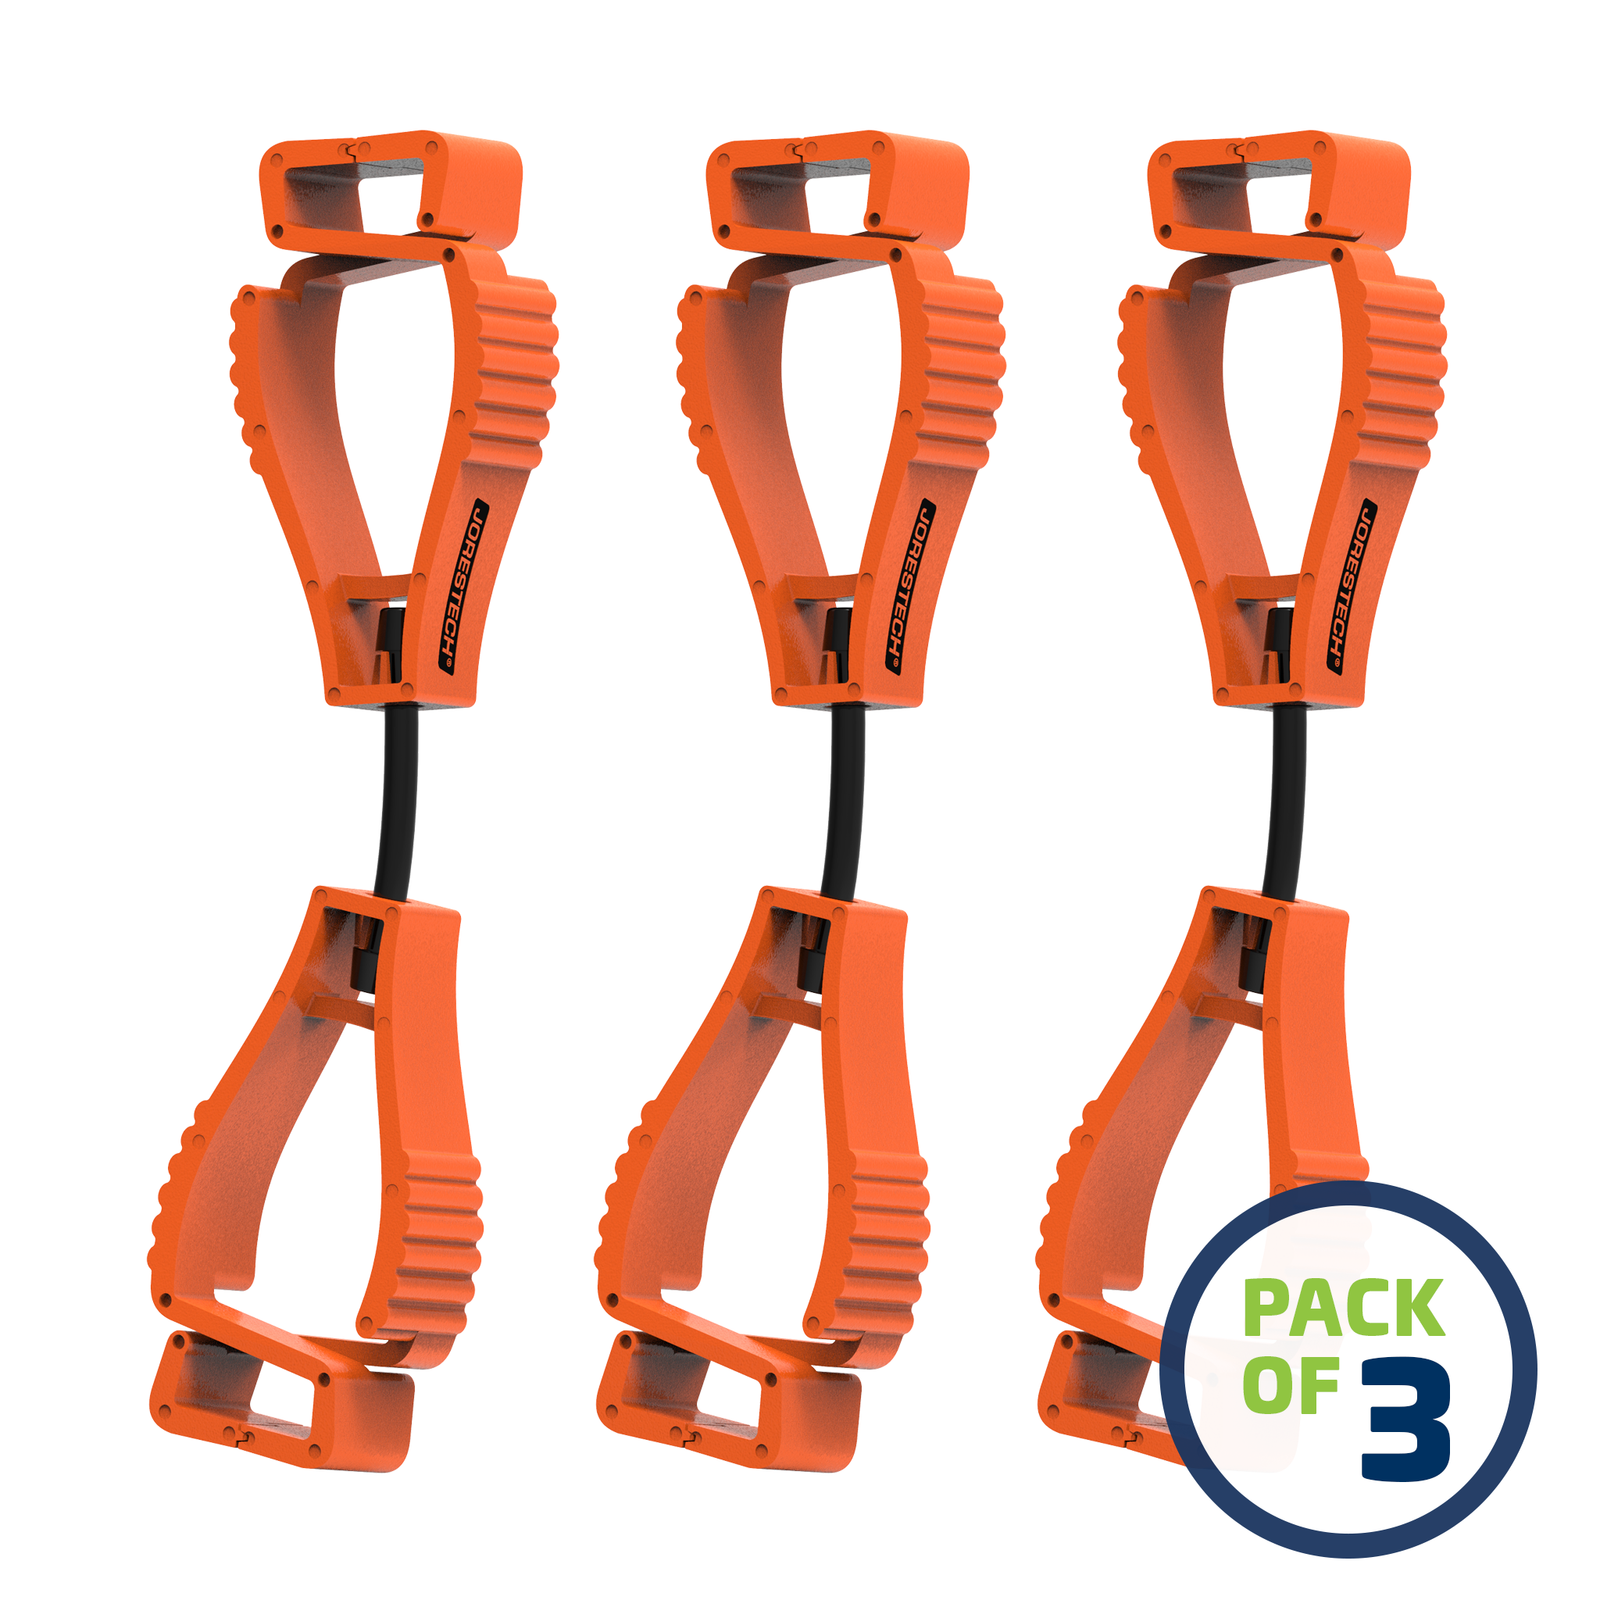 Pack of 3 Orange JORESTECH glove clip safety holders